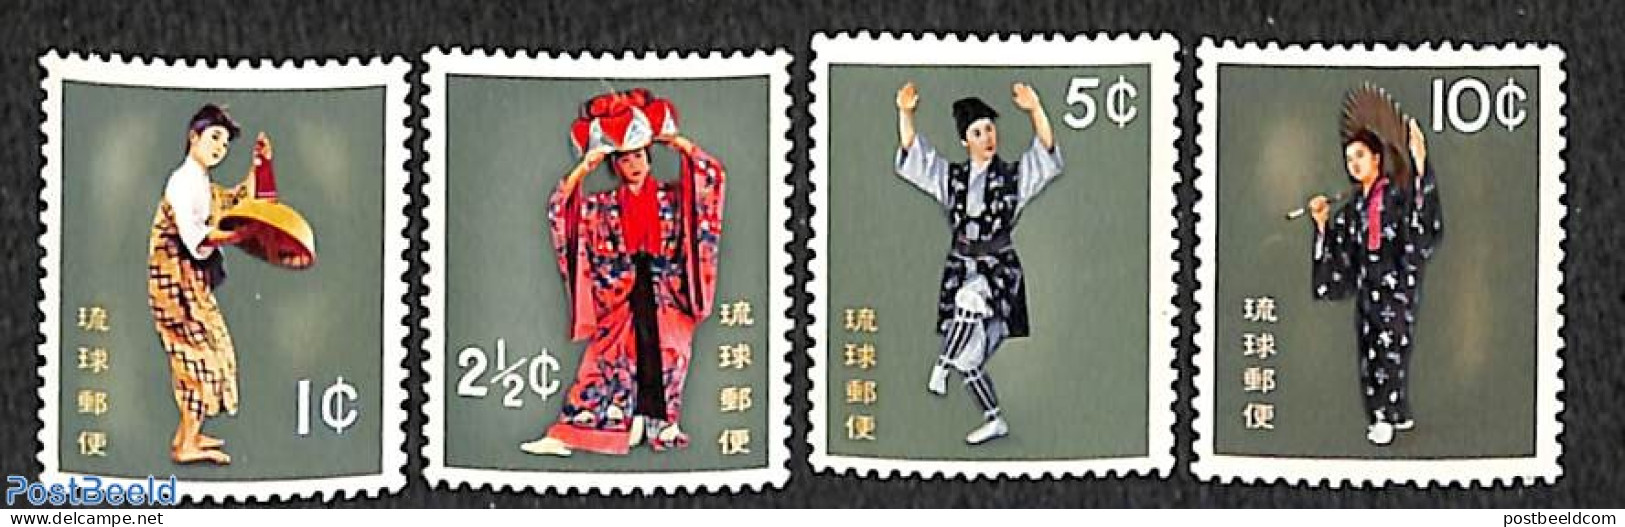 Ryu-Kyu 1960 Tradional Dances 4v, Mint NH, Performance Art - Various - Dance & Ballet - Folklore - Danse